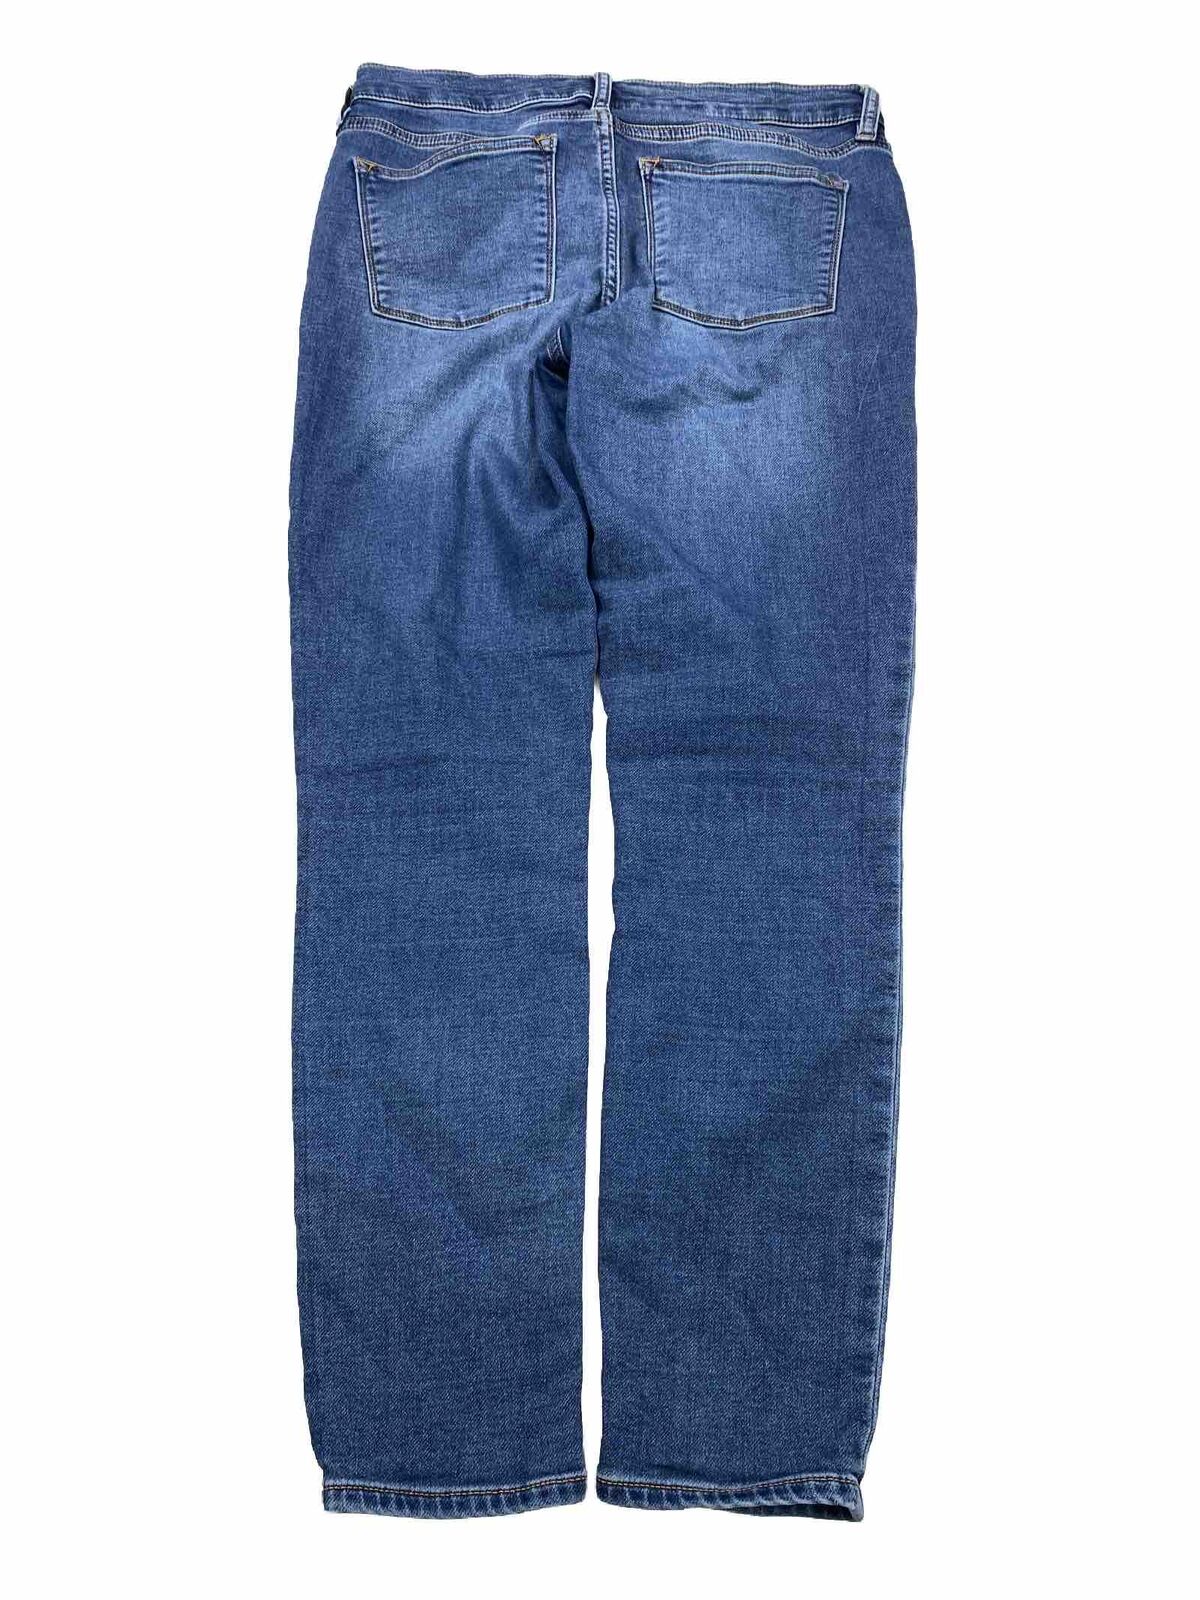 J. Crew Women's Medium Wash Mercantile Skinny Jeans - 29